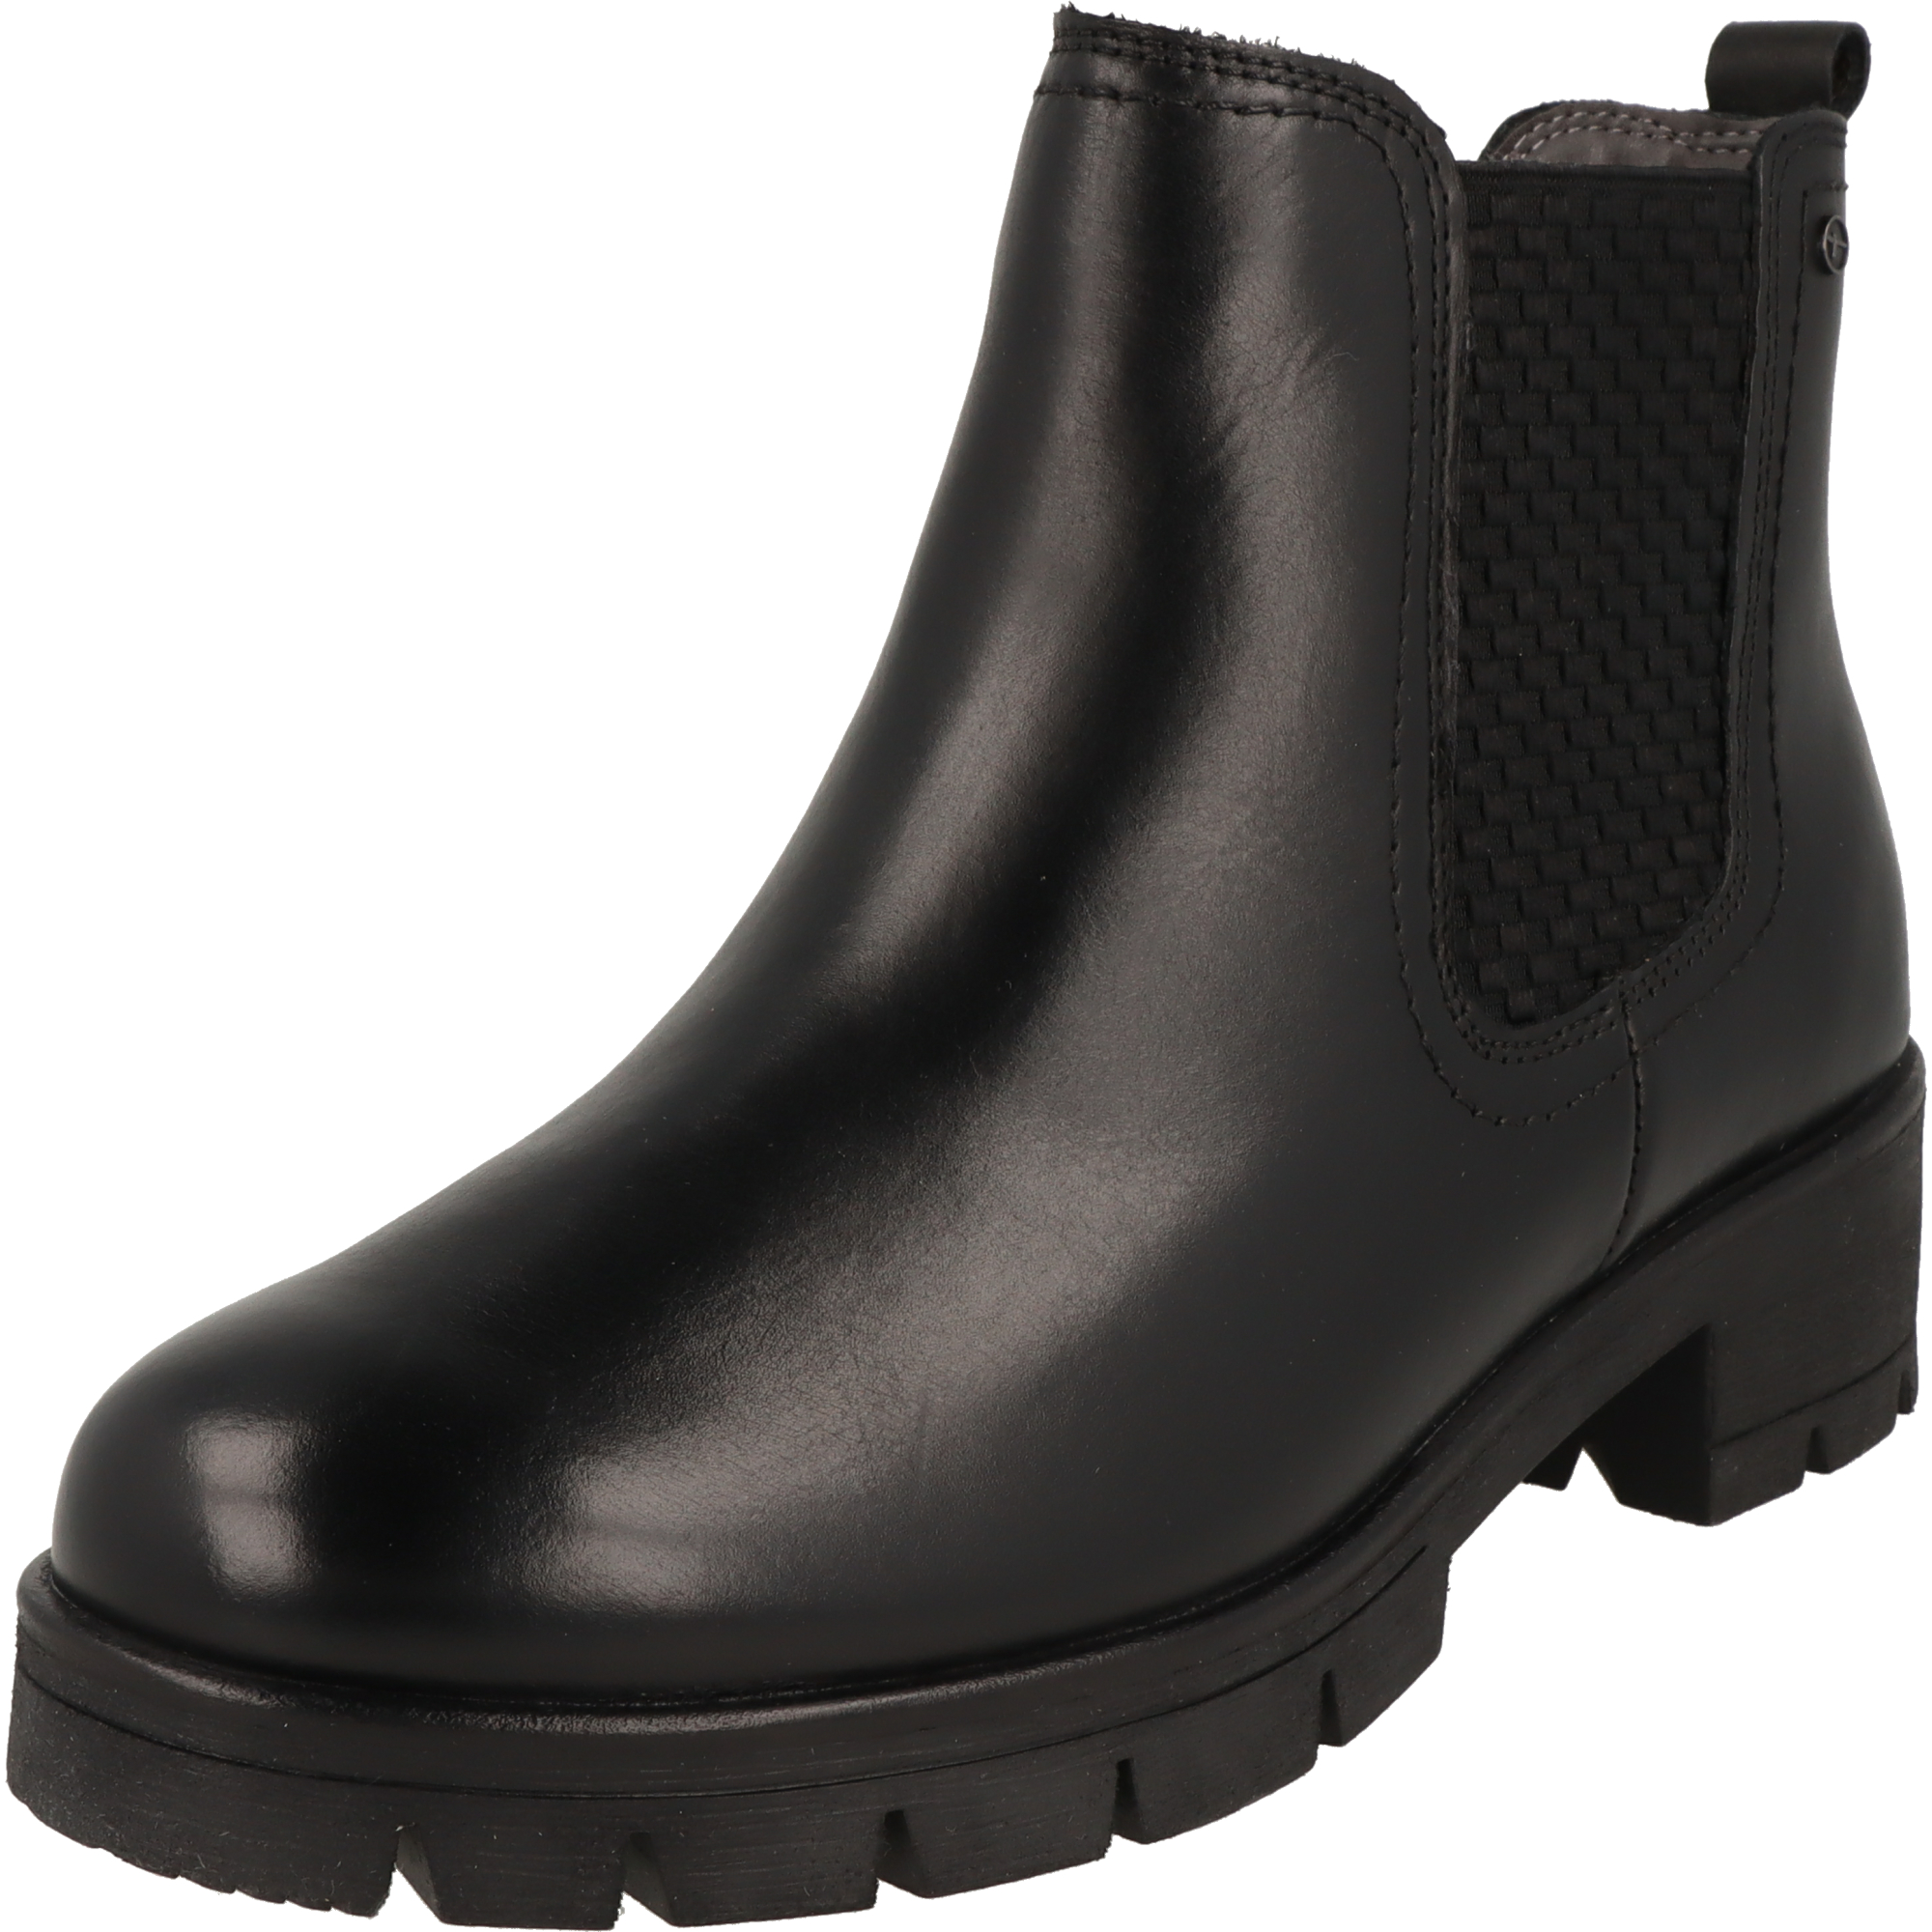 Tamaris Comfort 8-85412-41 Damen Schuhe Chelsea Boots Leder Stiefel Black